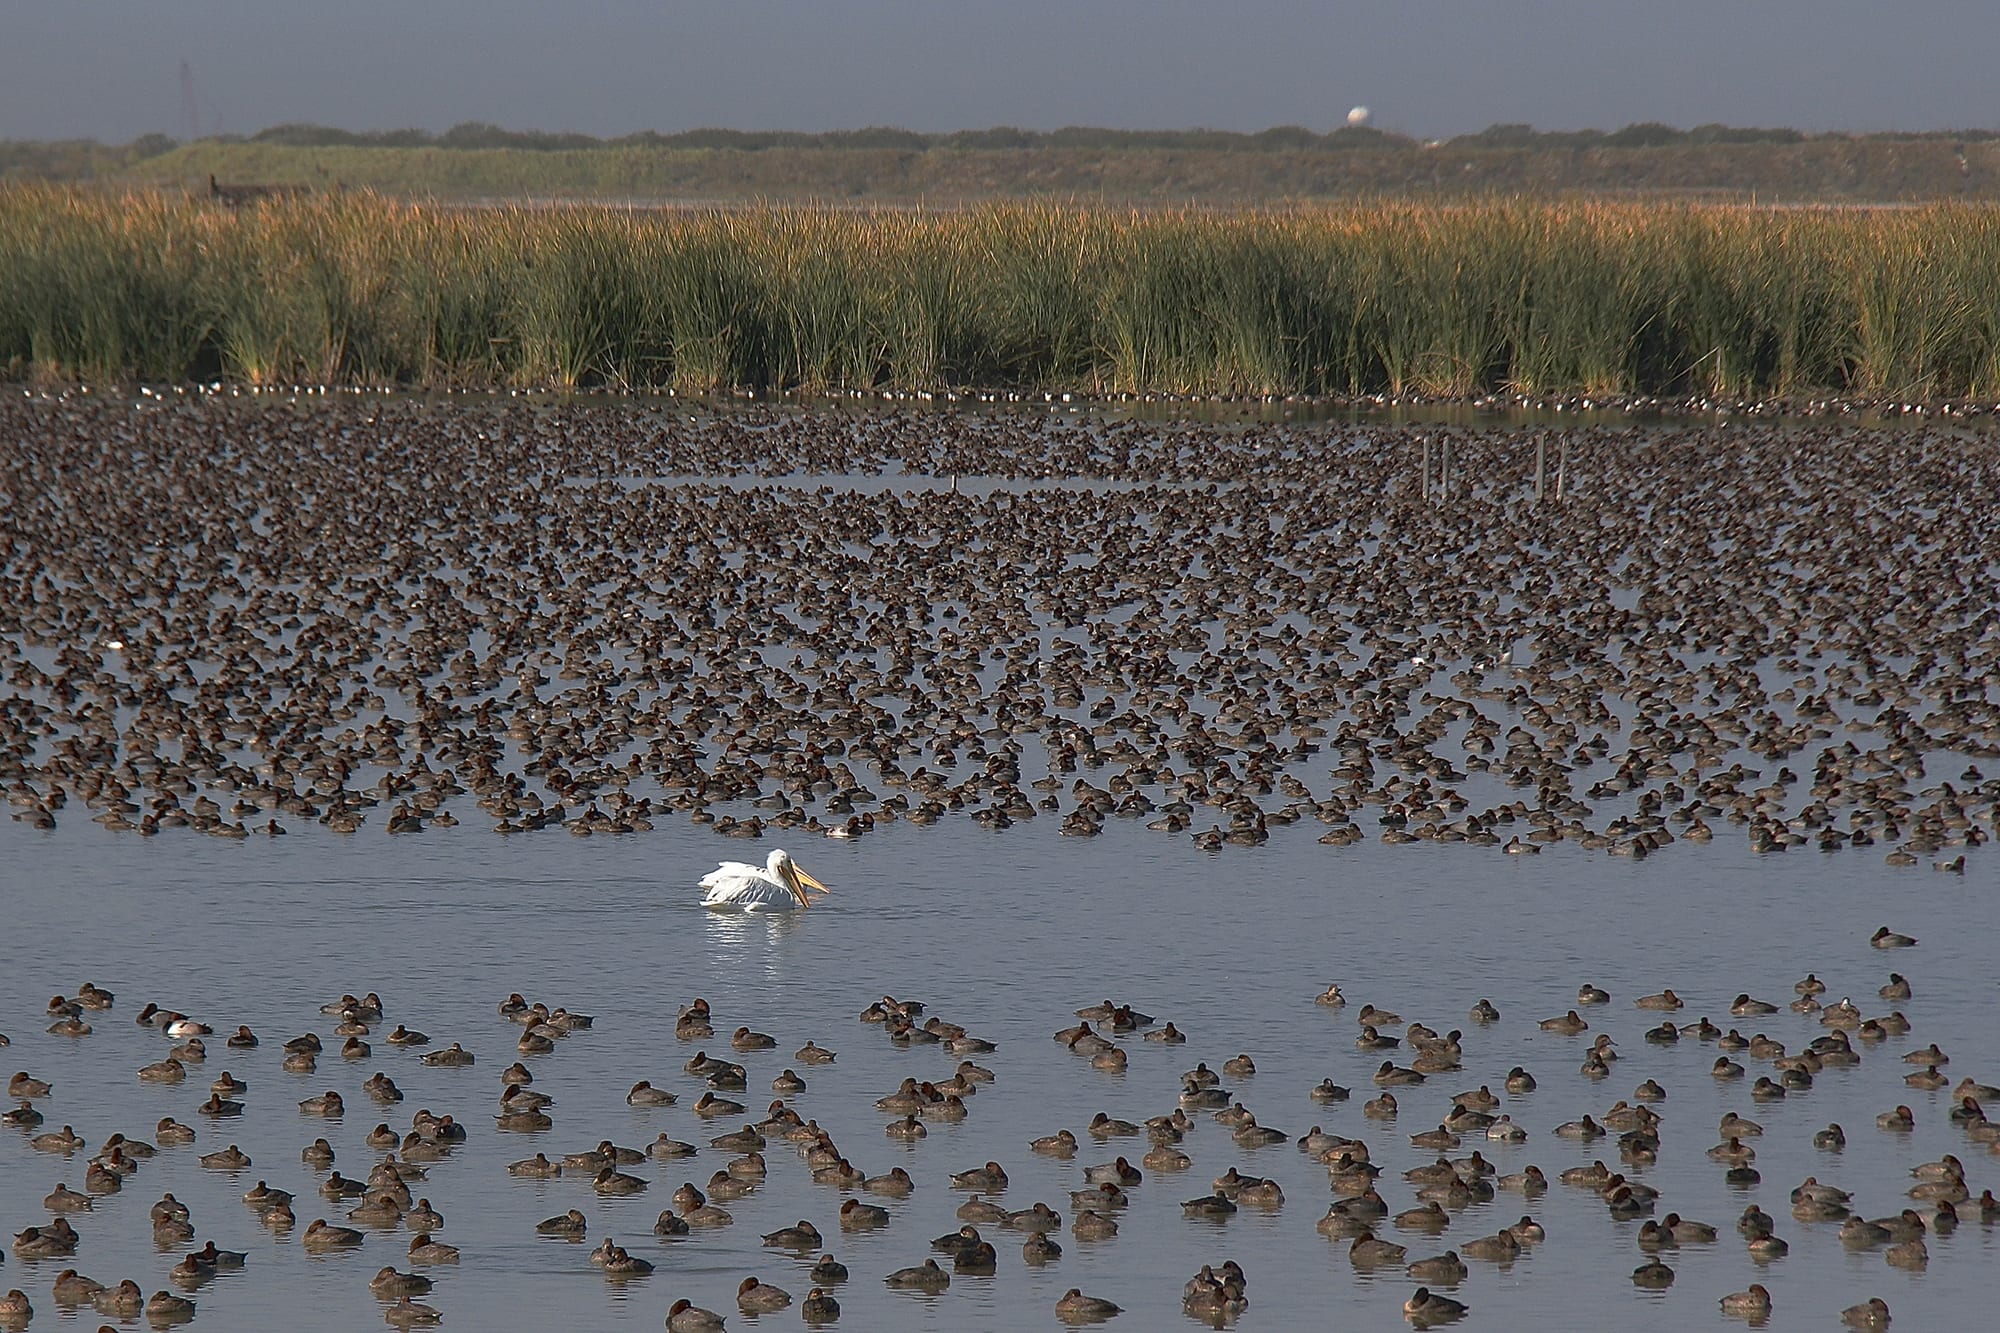 A solitary pelican amongst thousands of ducks